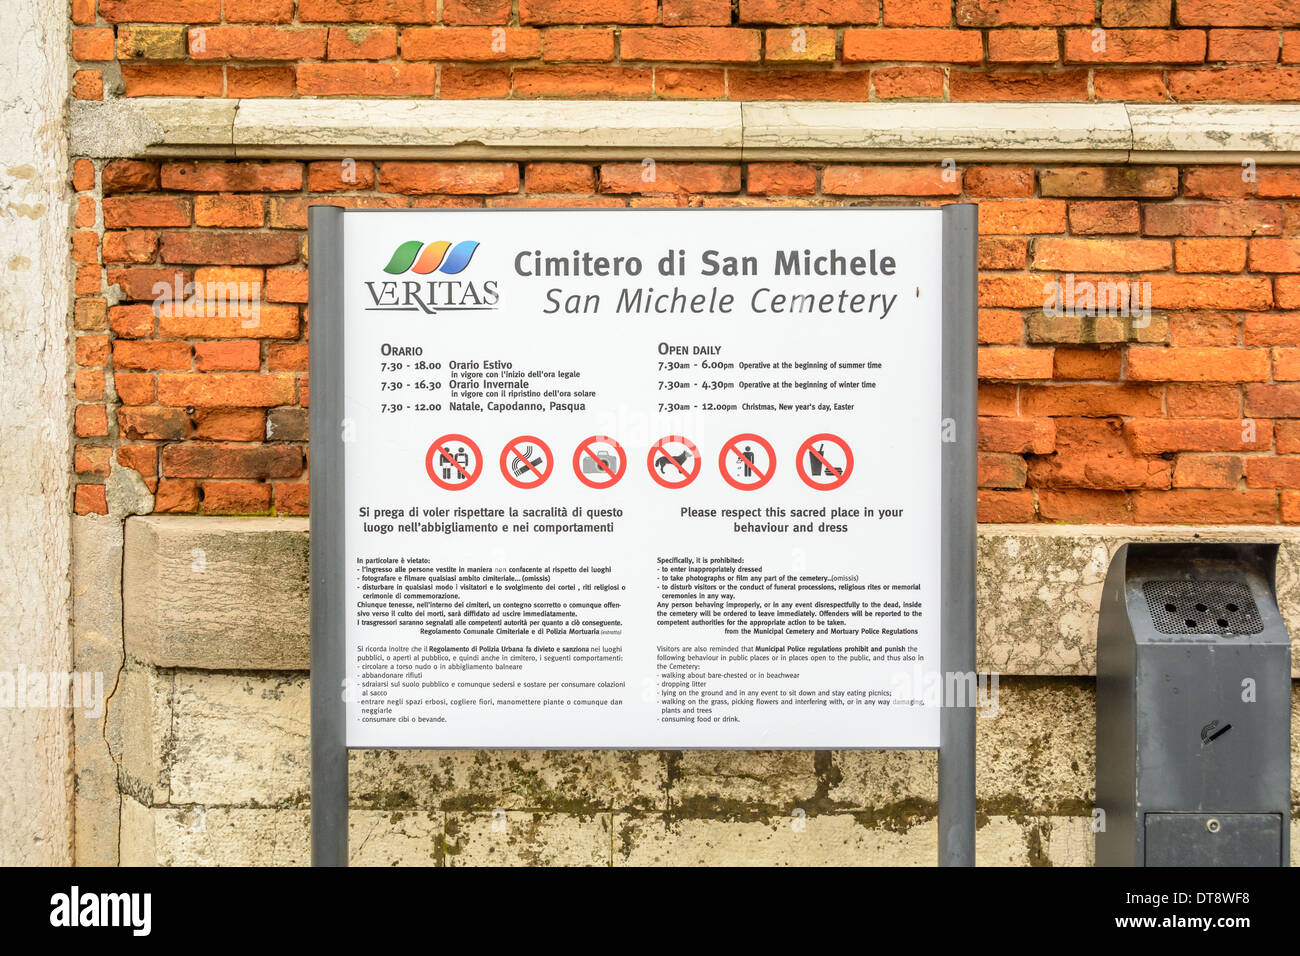 Venice, Italy. Cimitero di San Michele, cemetery island, San Michele Cemetery, direction and bye-law sign with rules. Stock Photo